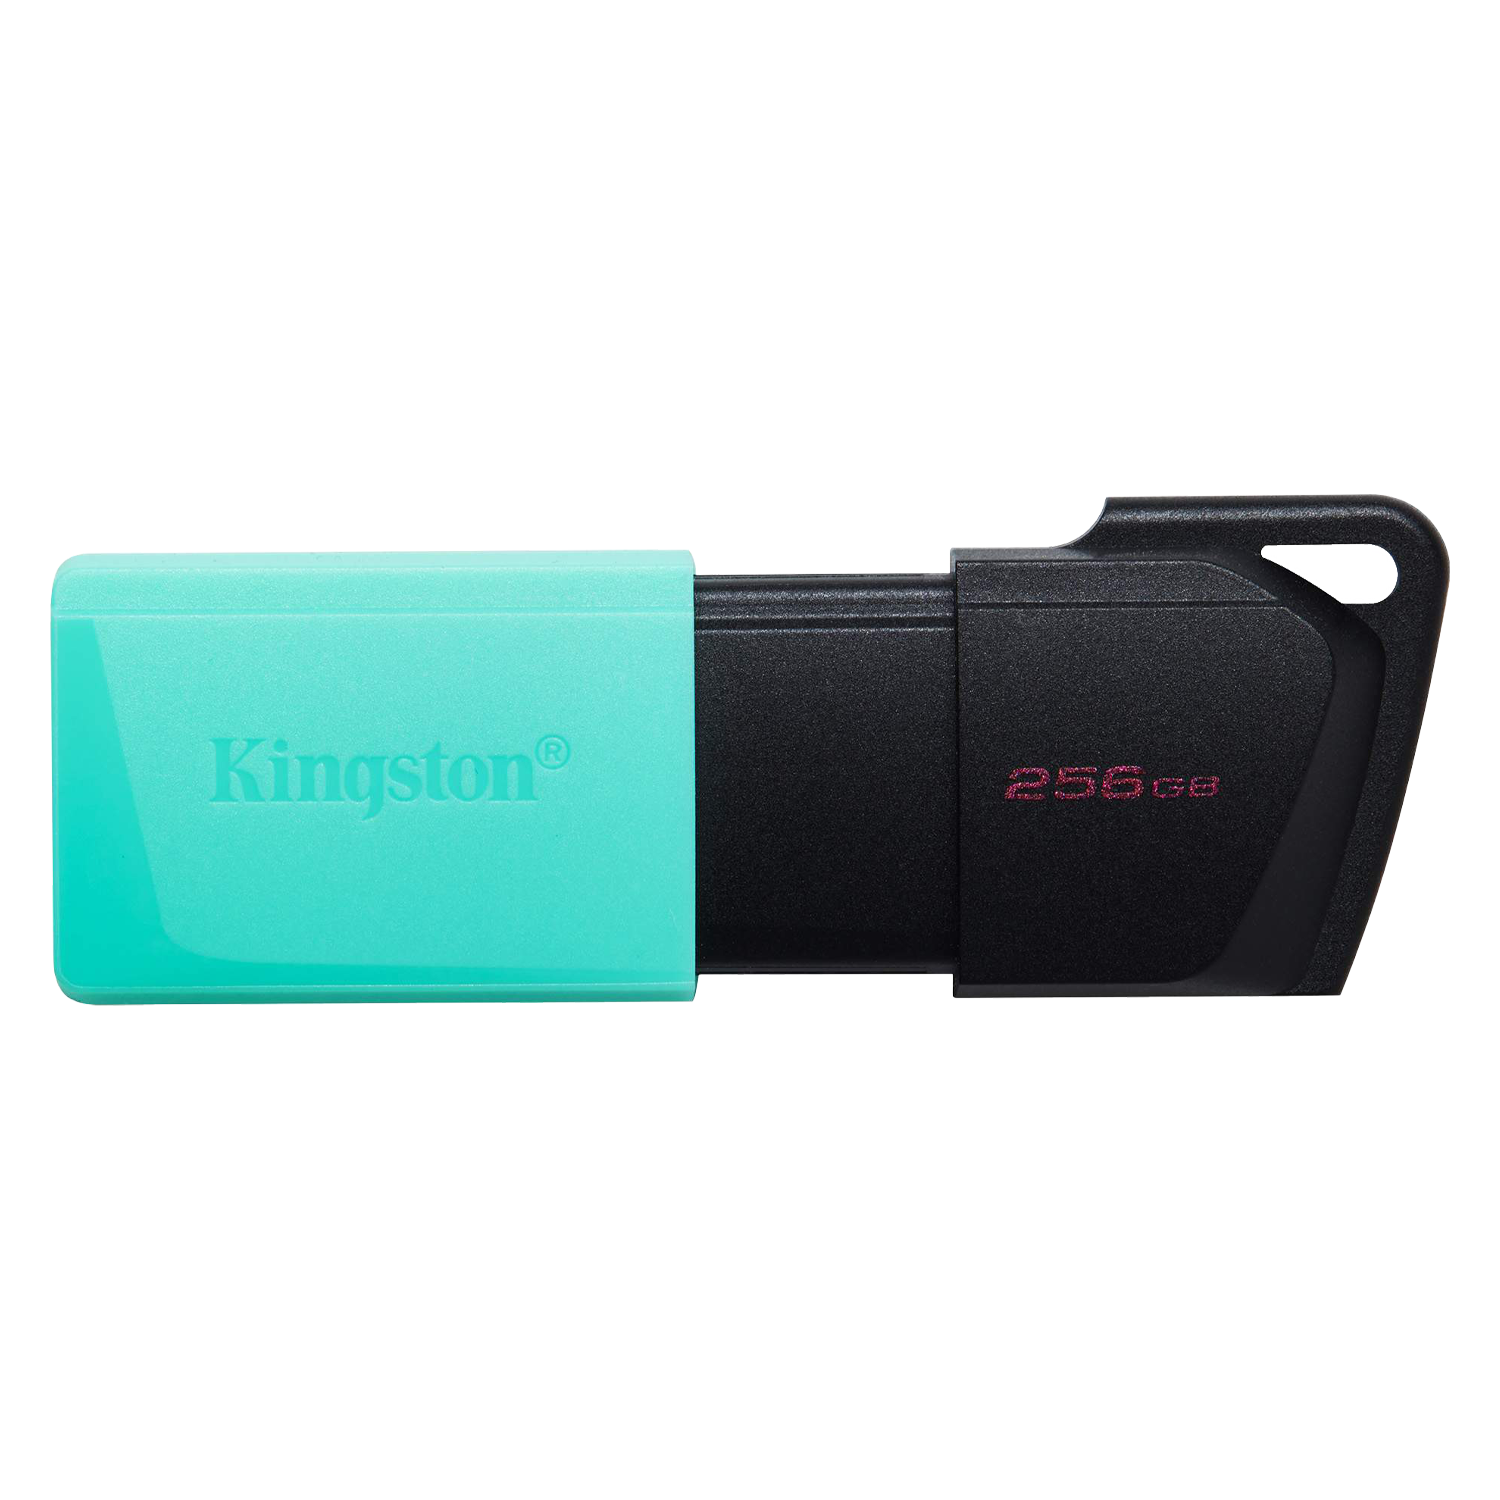 Pendrive Kingston DataTraveler Exodia DTXM/256GB / 256GB / USB 3.2 - Preto e Verde